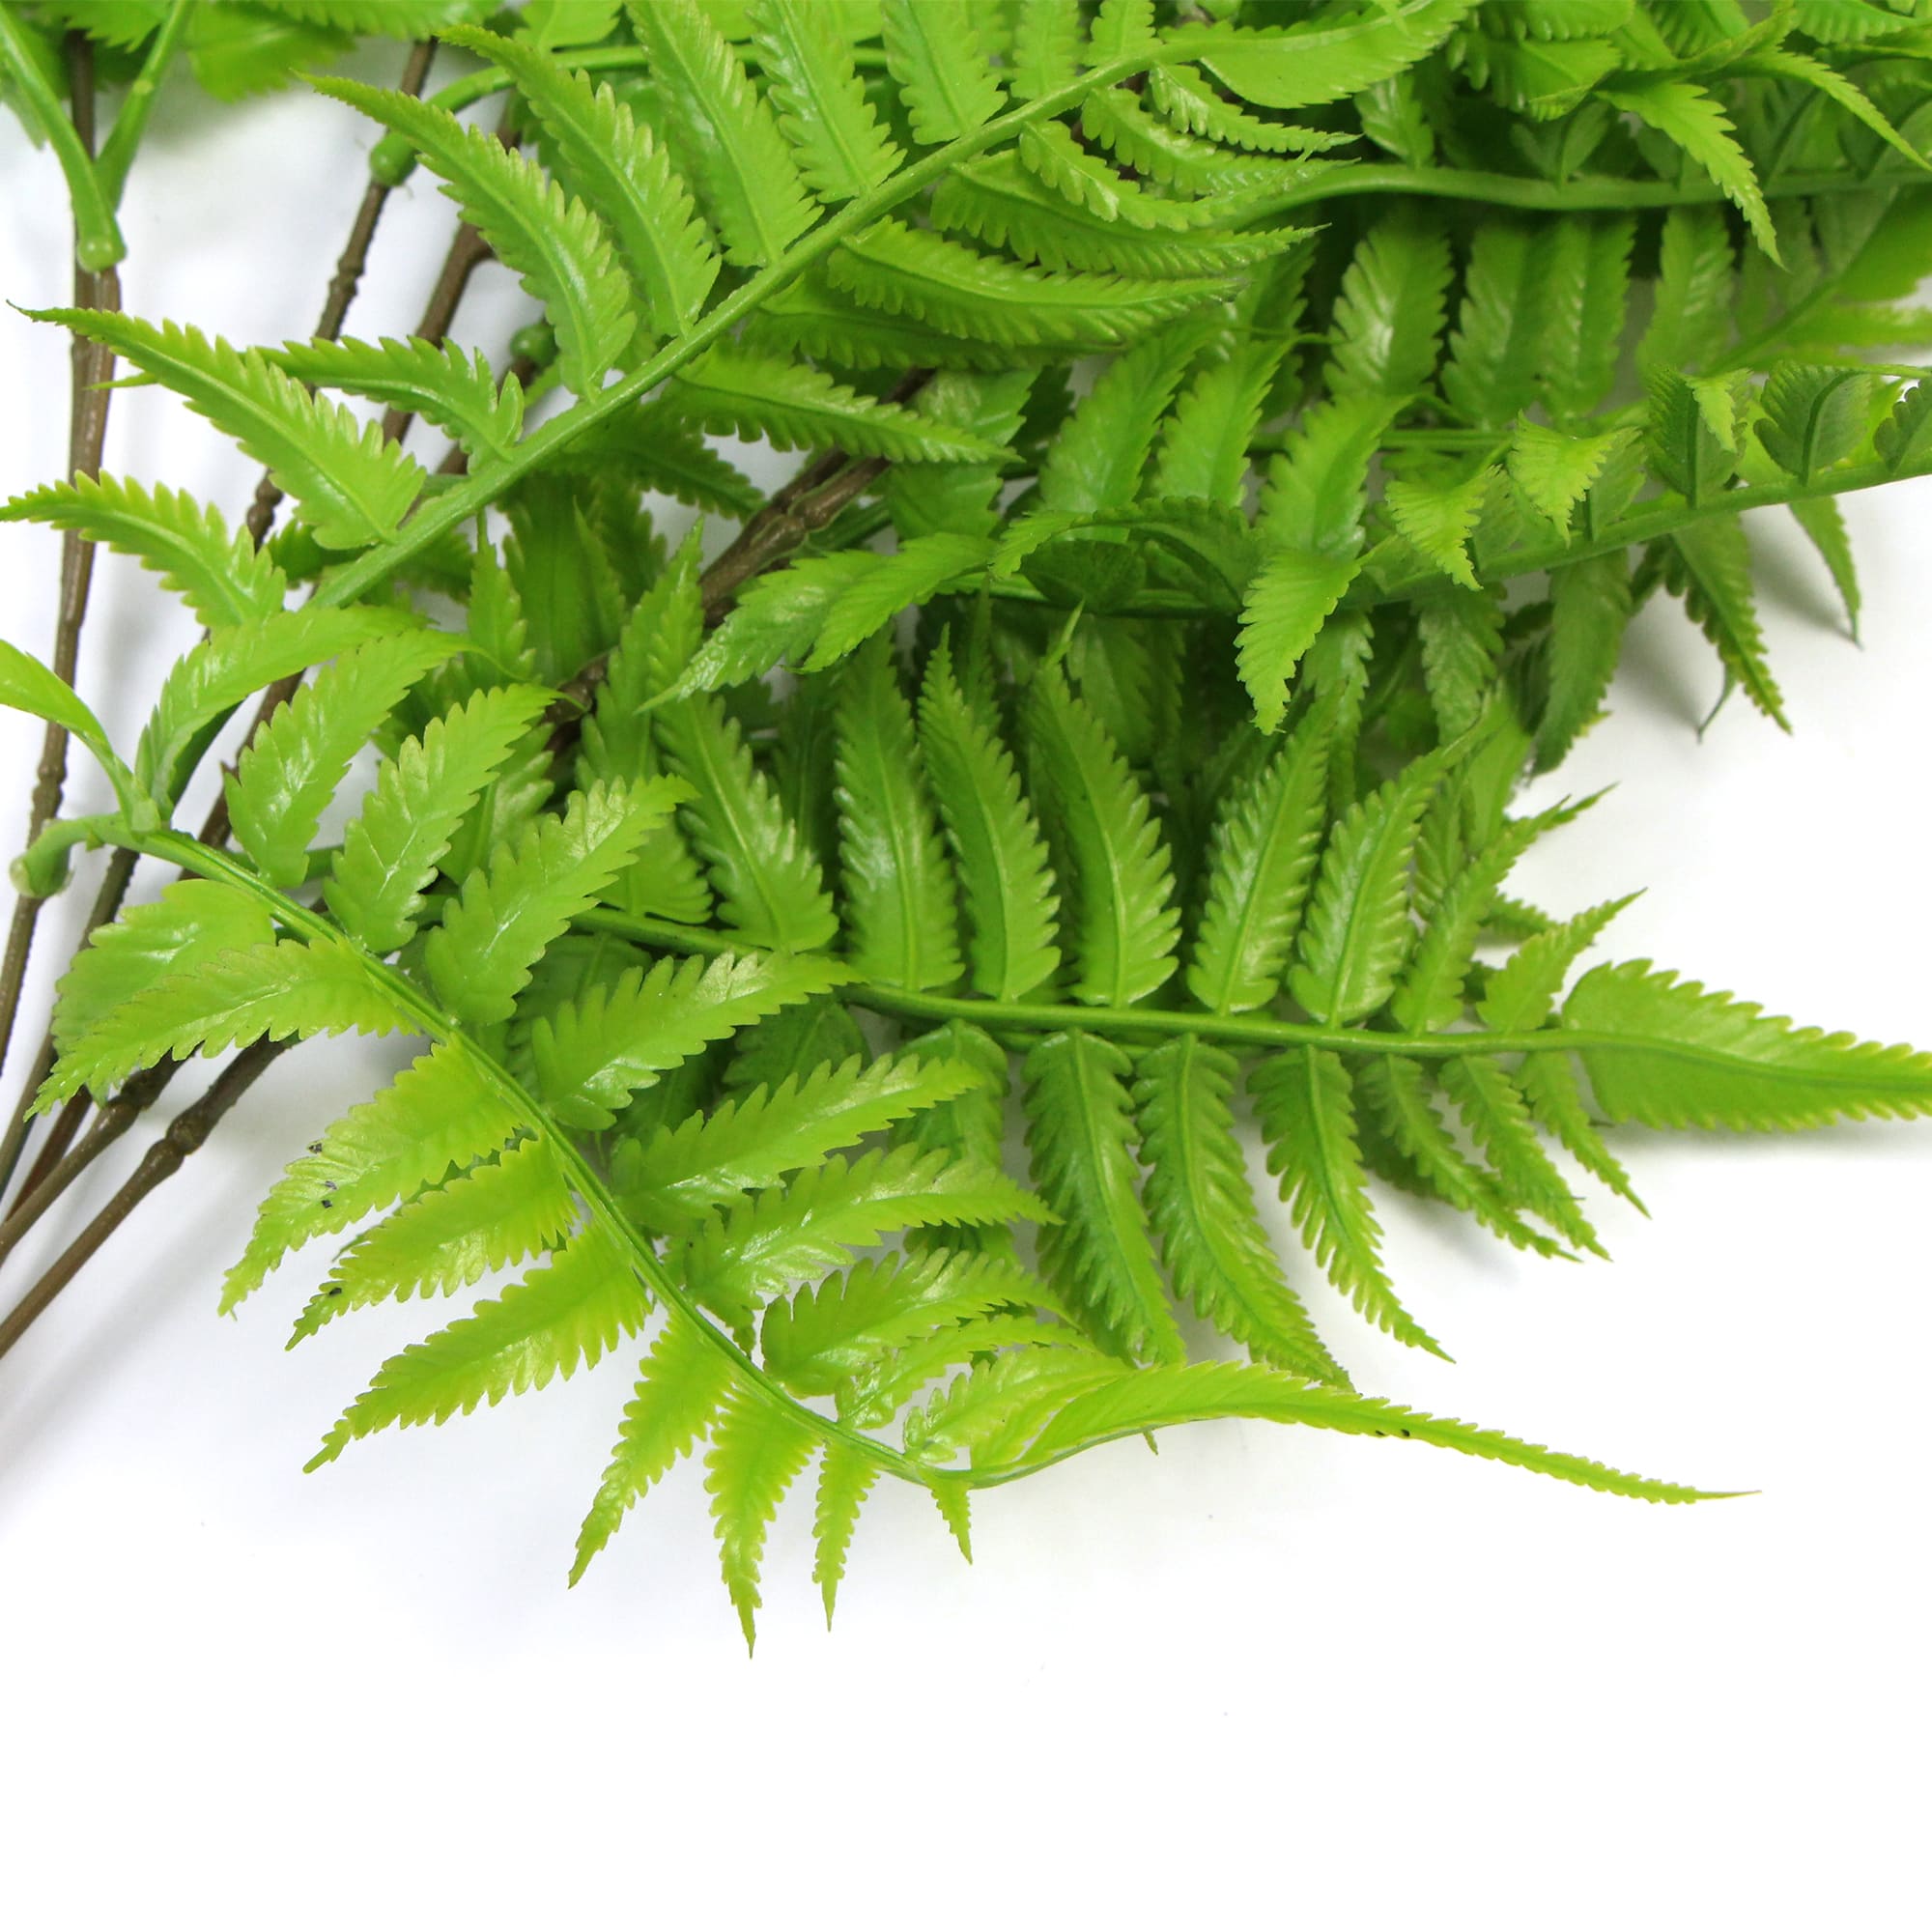 Artificial Hanging English Fern (Two-Tone) Foliage UV Resistant 80cm - Designer Vertical Gardens fake plant stem Stems / Ferns